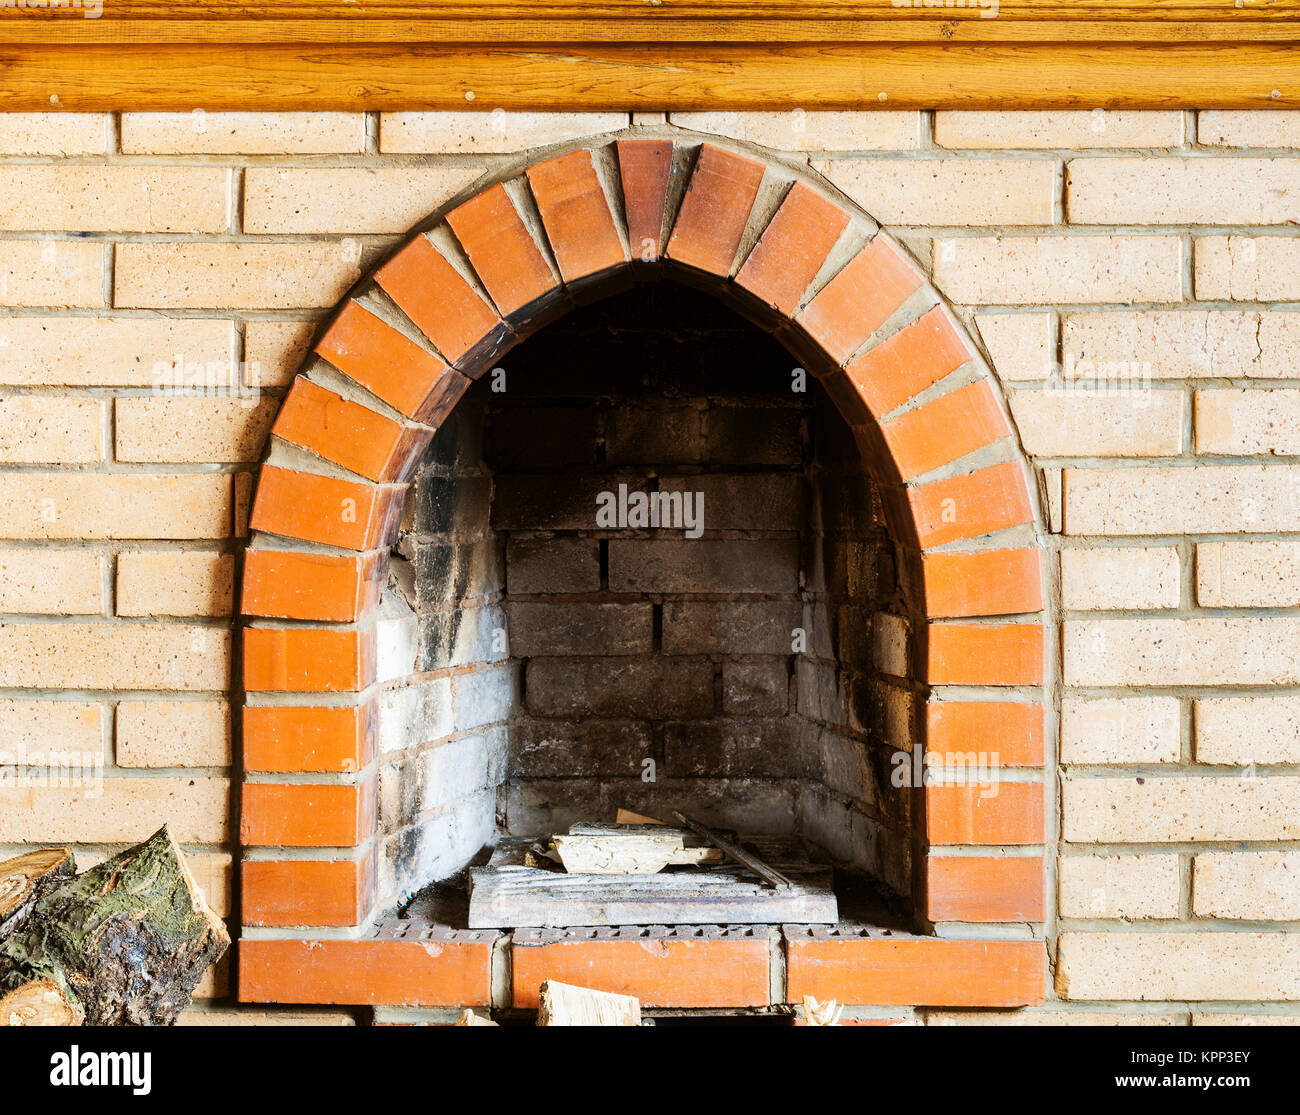 fire-box of not kindled brick fireplace Stock Photo